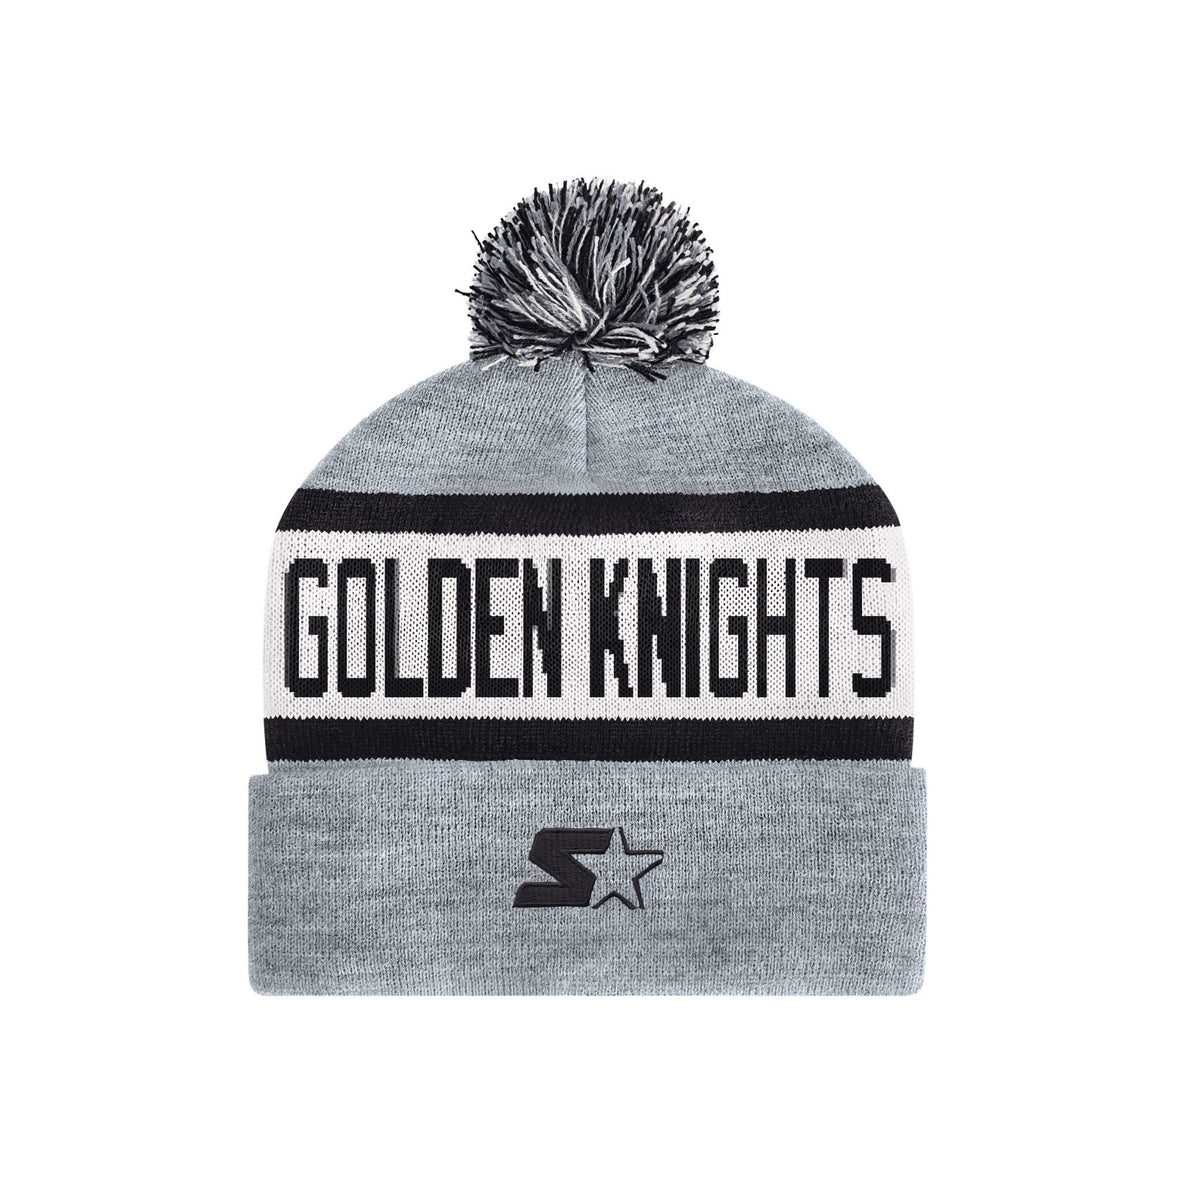 NHL Vegas Golden Knights Black Ice Beanie